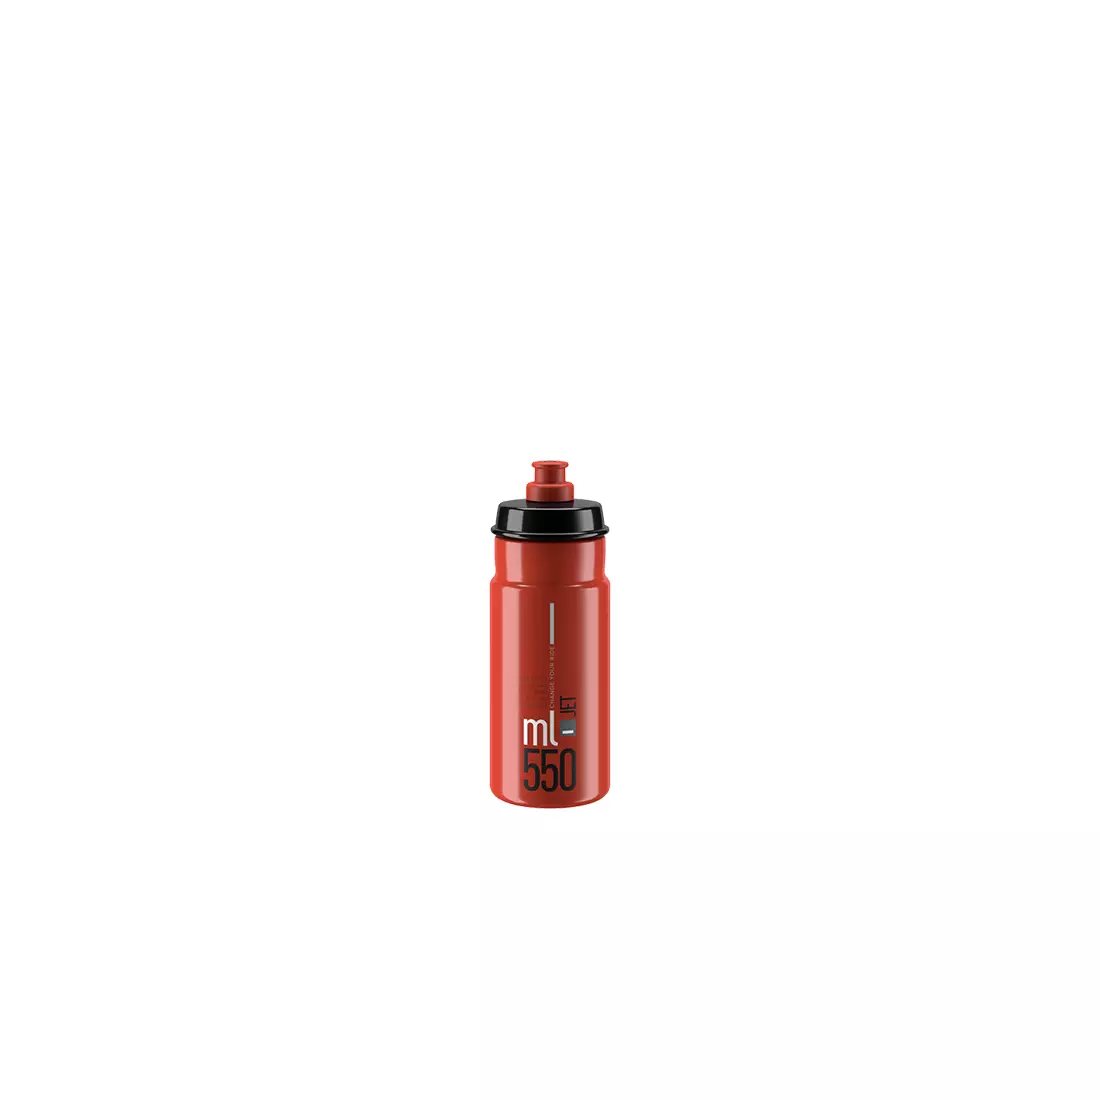 ELITE JET Bicycle water bottle 550ml, red / black